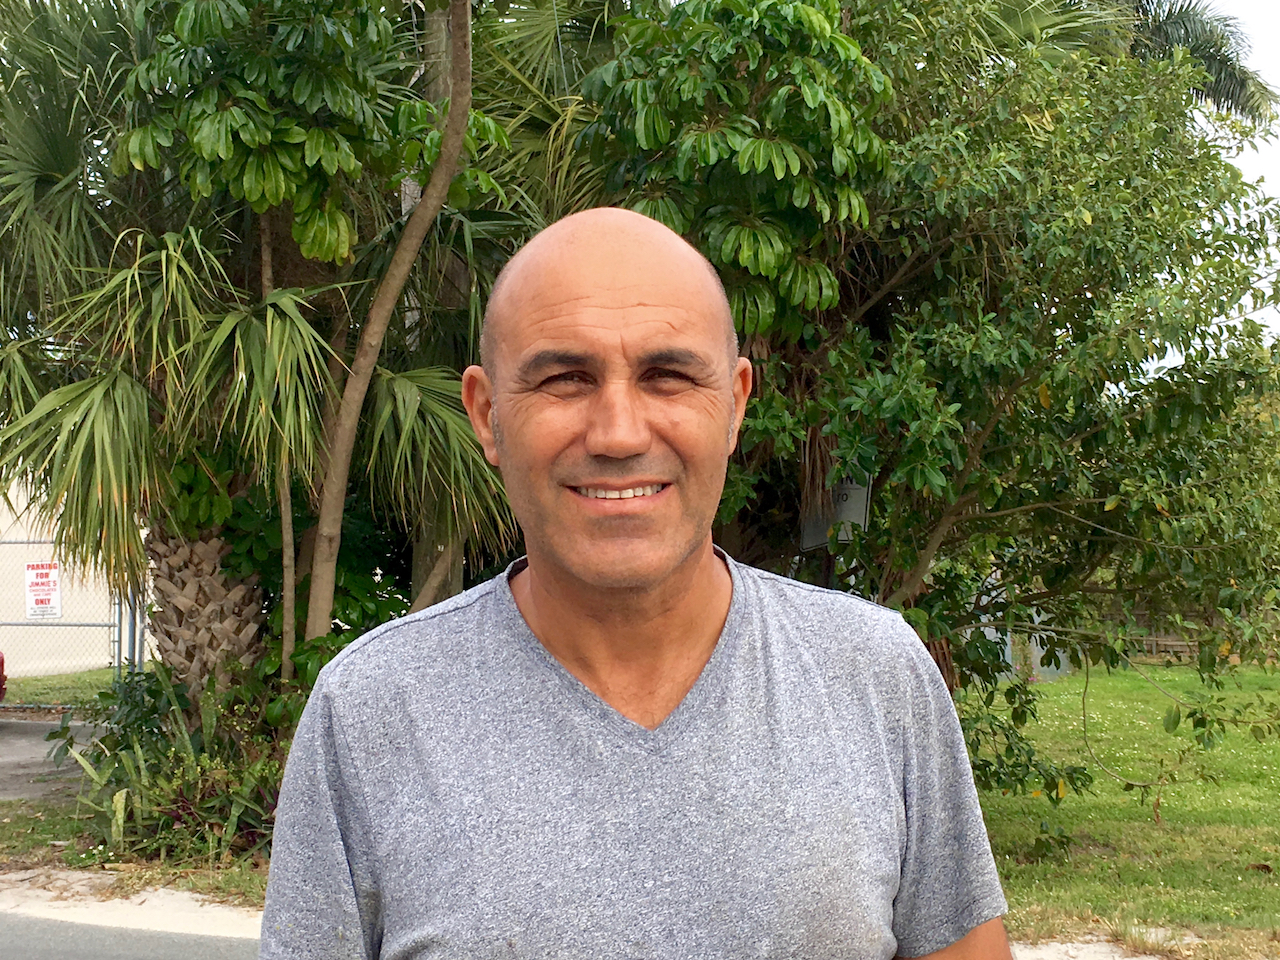 Plombier francophone en Floride sur Miami Dade et Broward County : Jean-Yves Chekroun